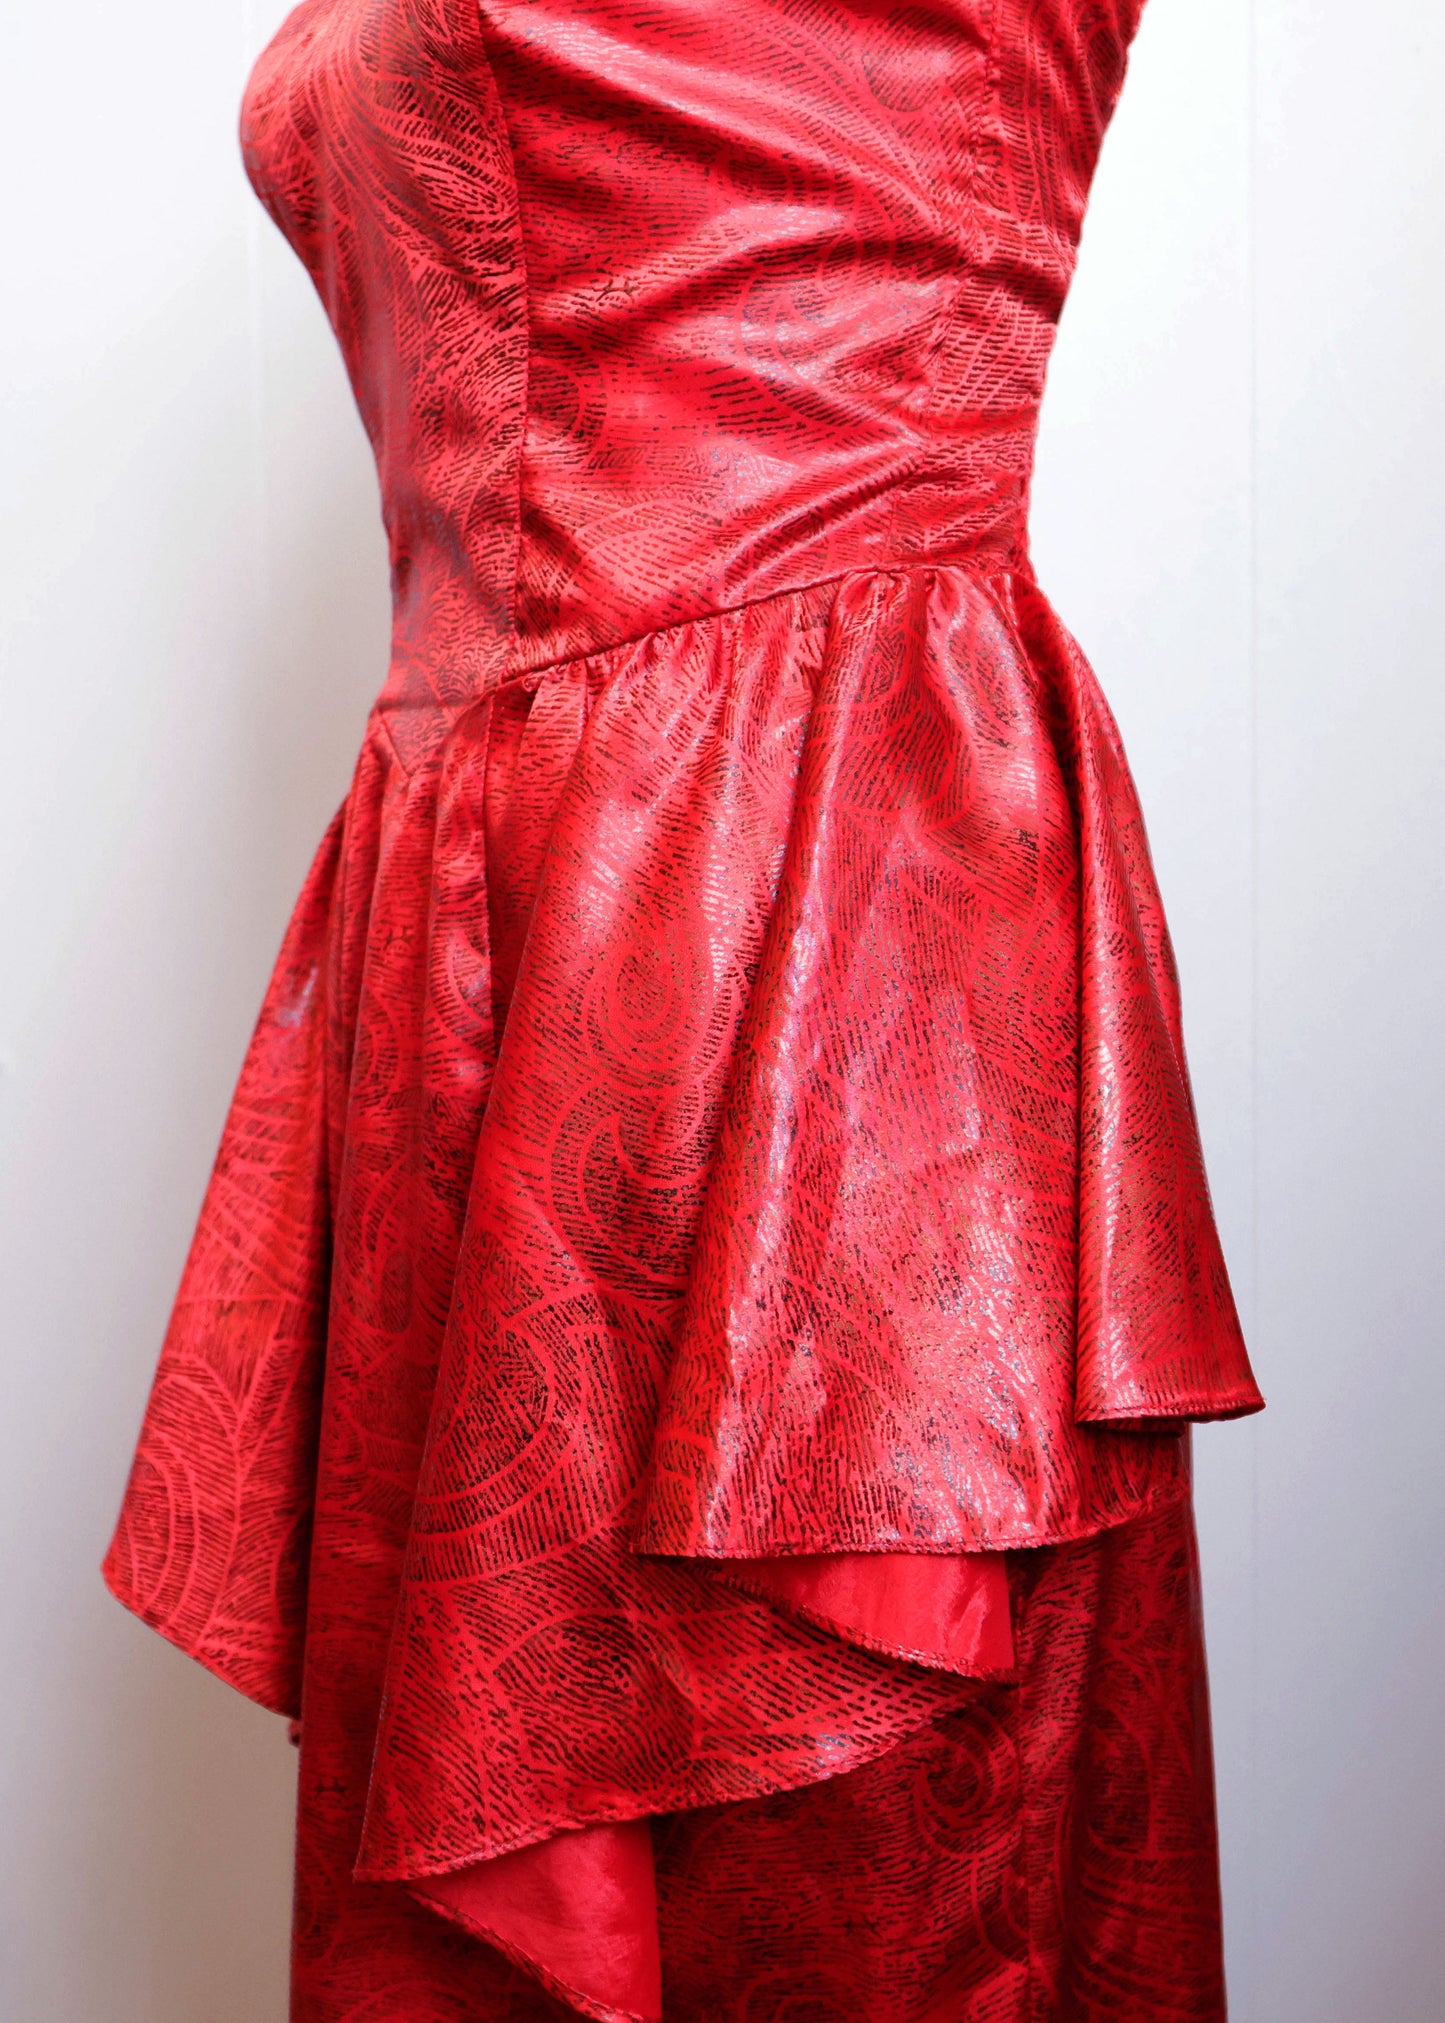 1980's Arc Red Strapless Dress with Peplum